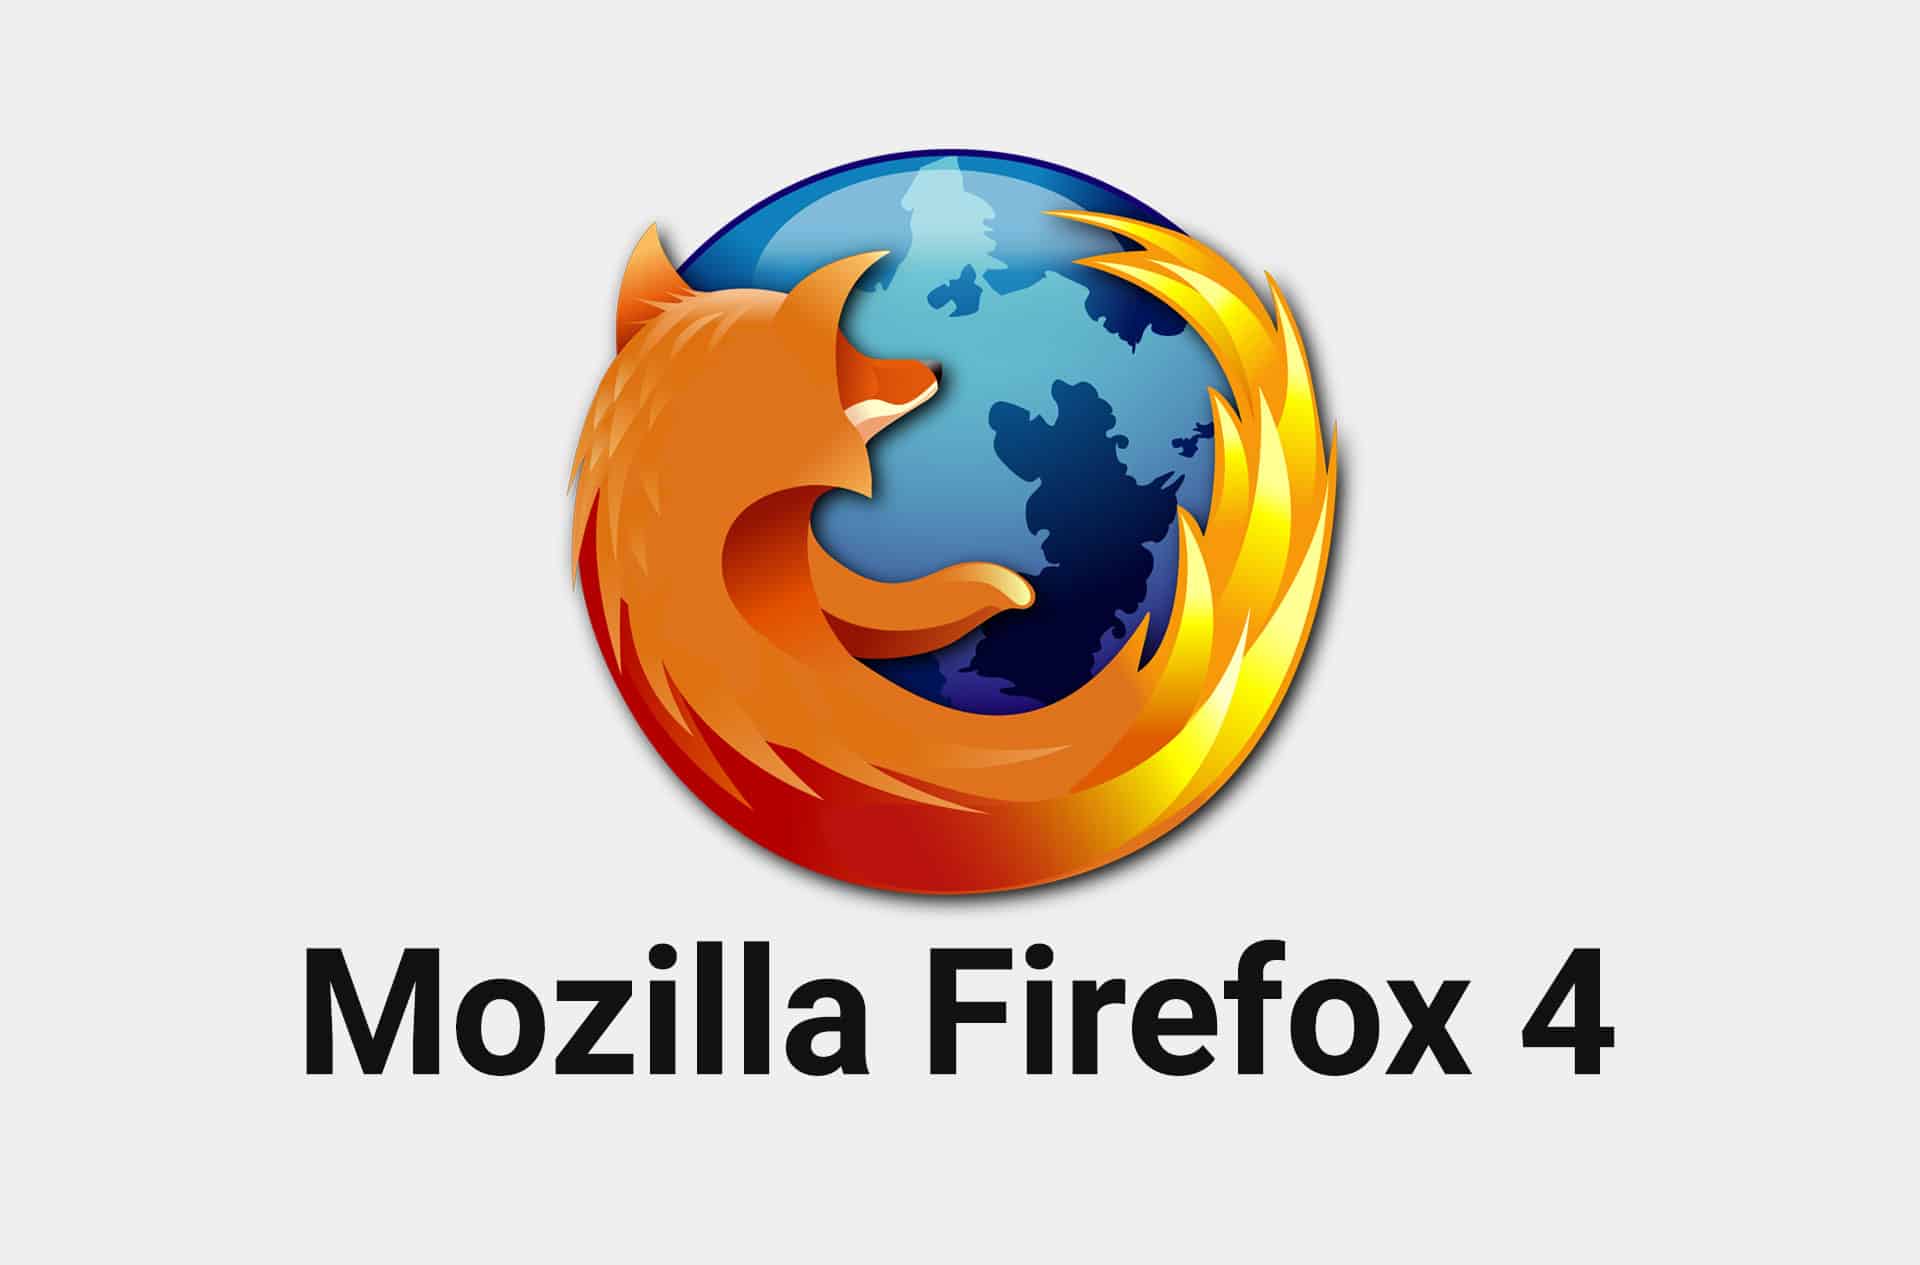 Мозила фирефох для виндовс 10. Фаерфокс. Mozilla Firefox 4. Mozilla Firefox игровой. Mozilla Firefox Windows 7.